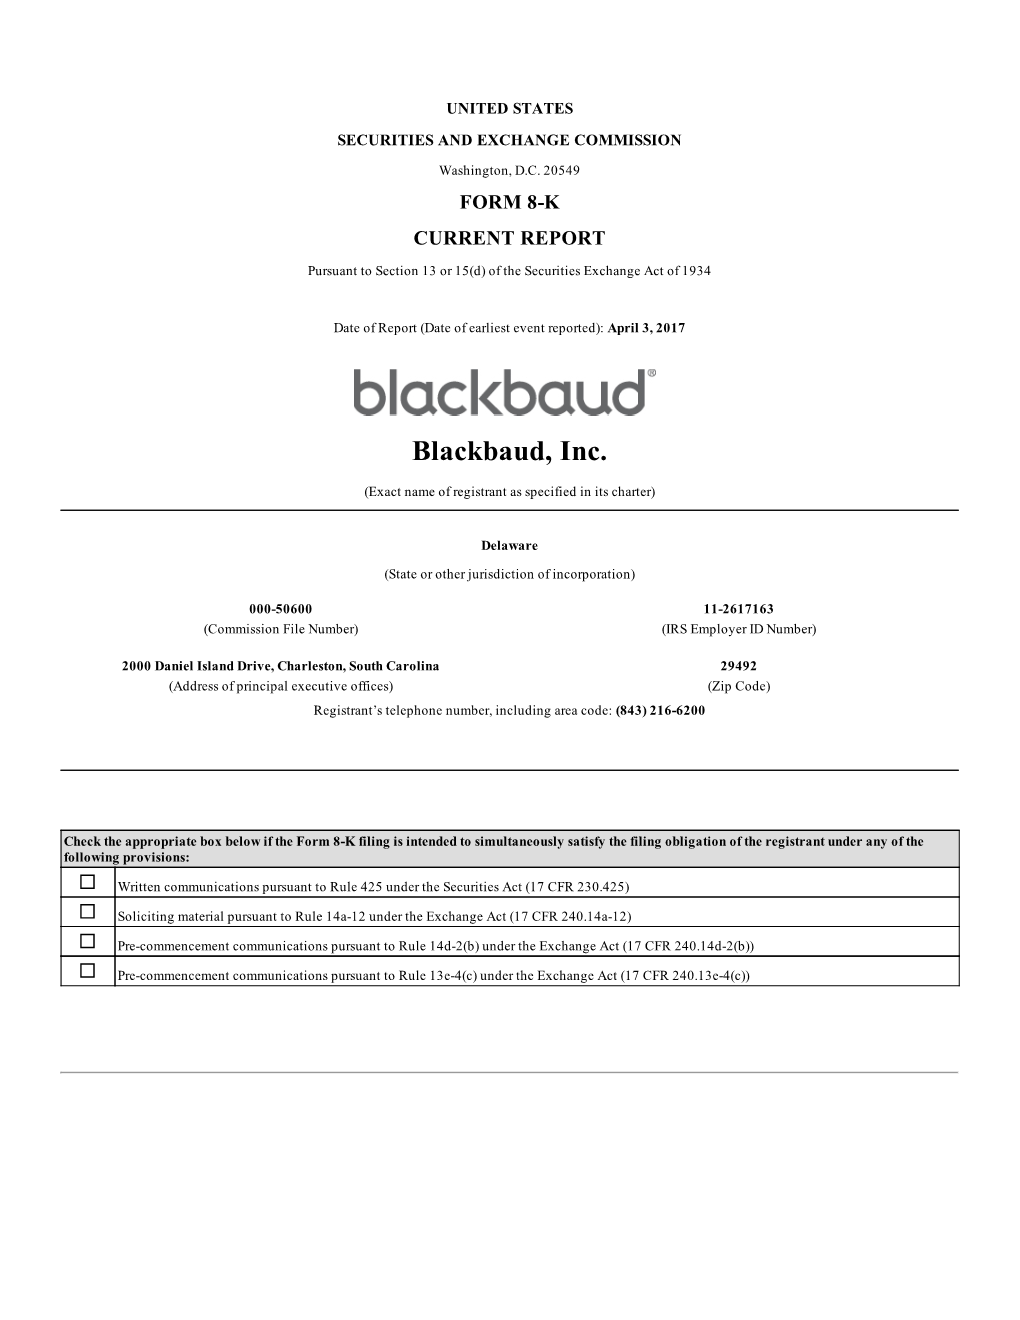 Blackbaud, Inc